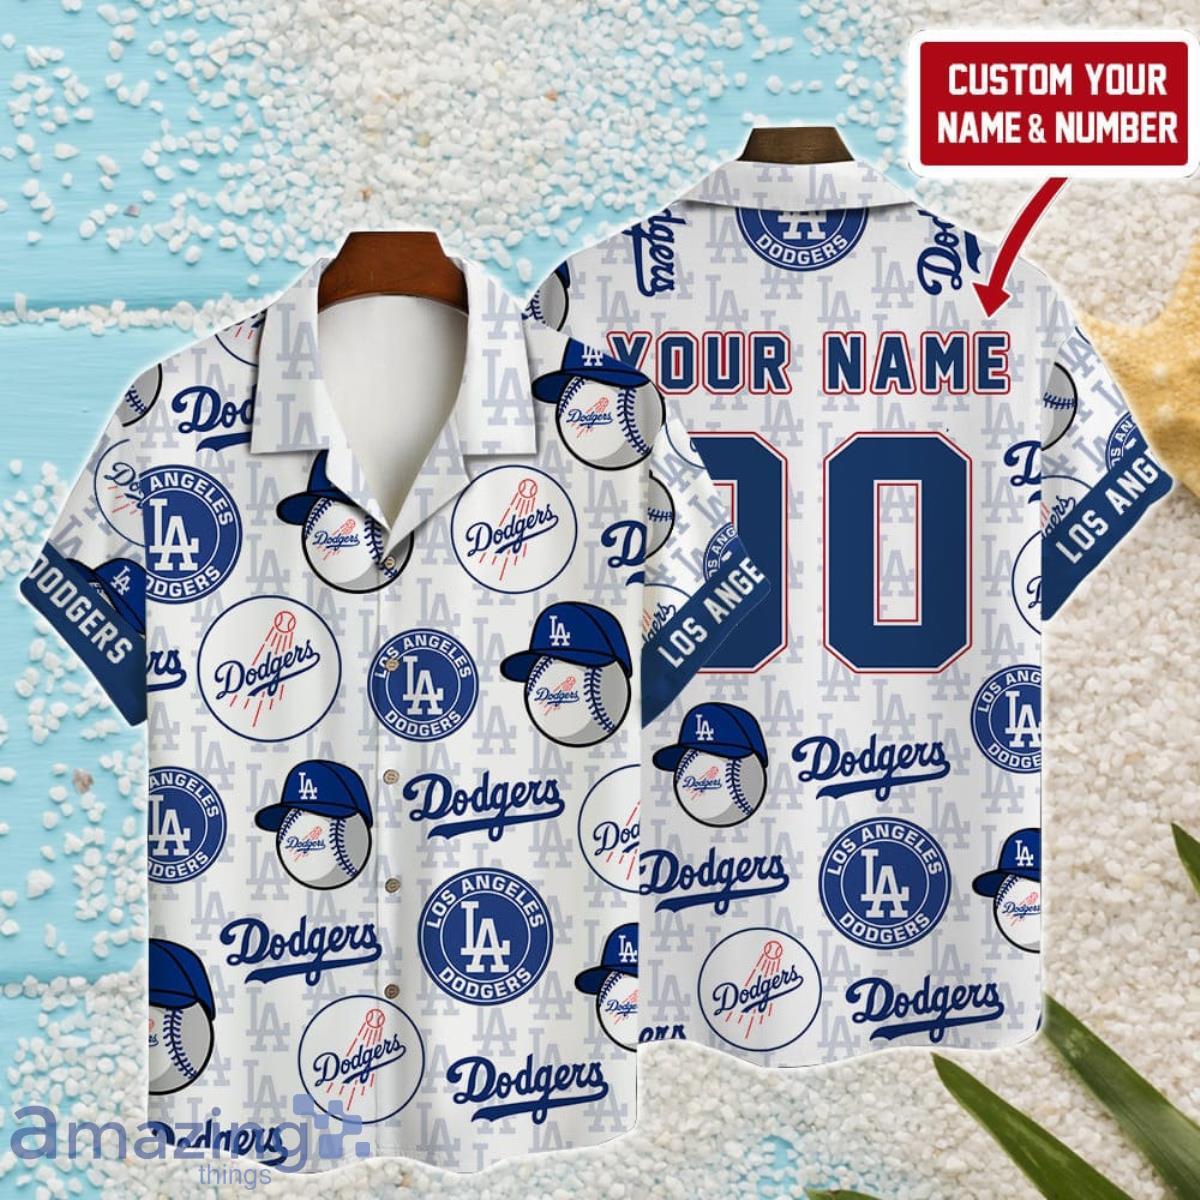 Los Angeles Dodgers Major League Baseball Hawaiian Shirt